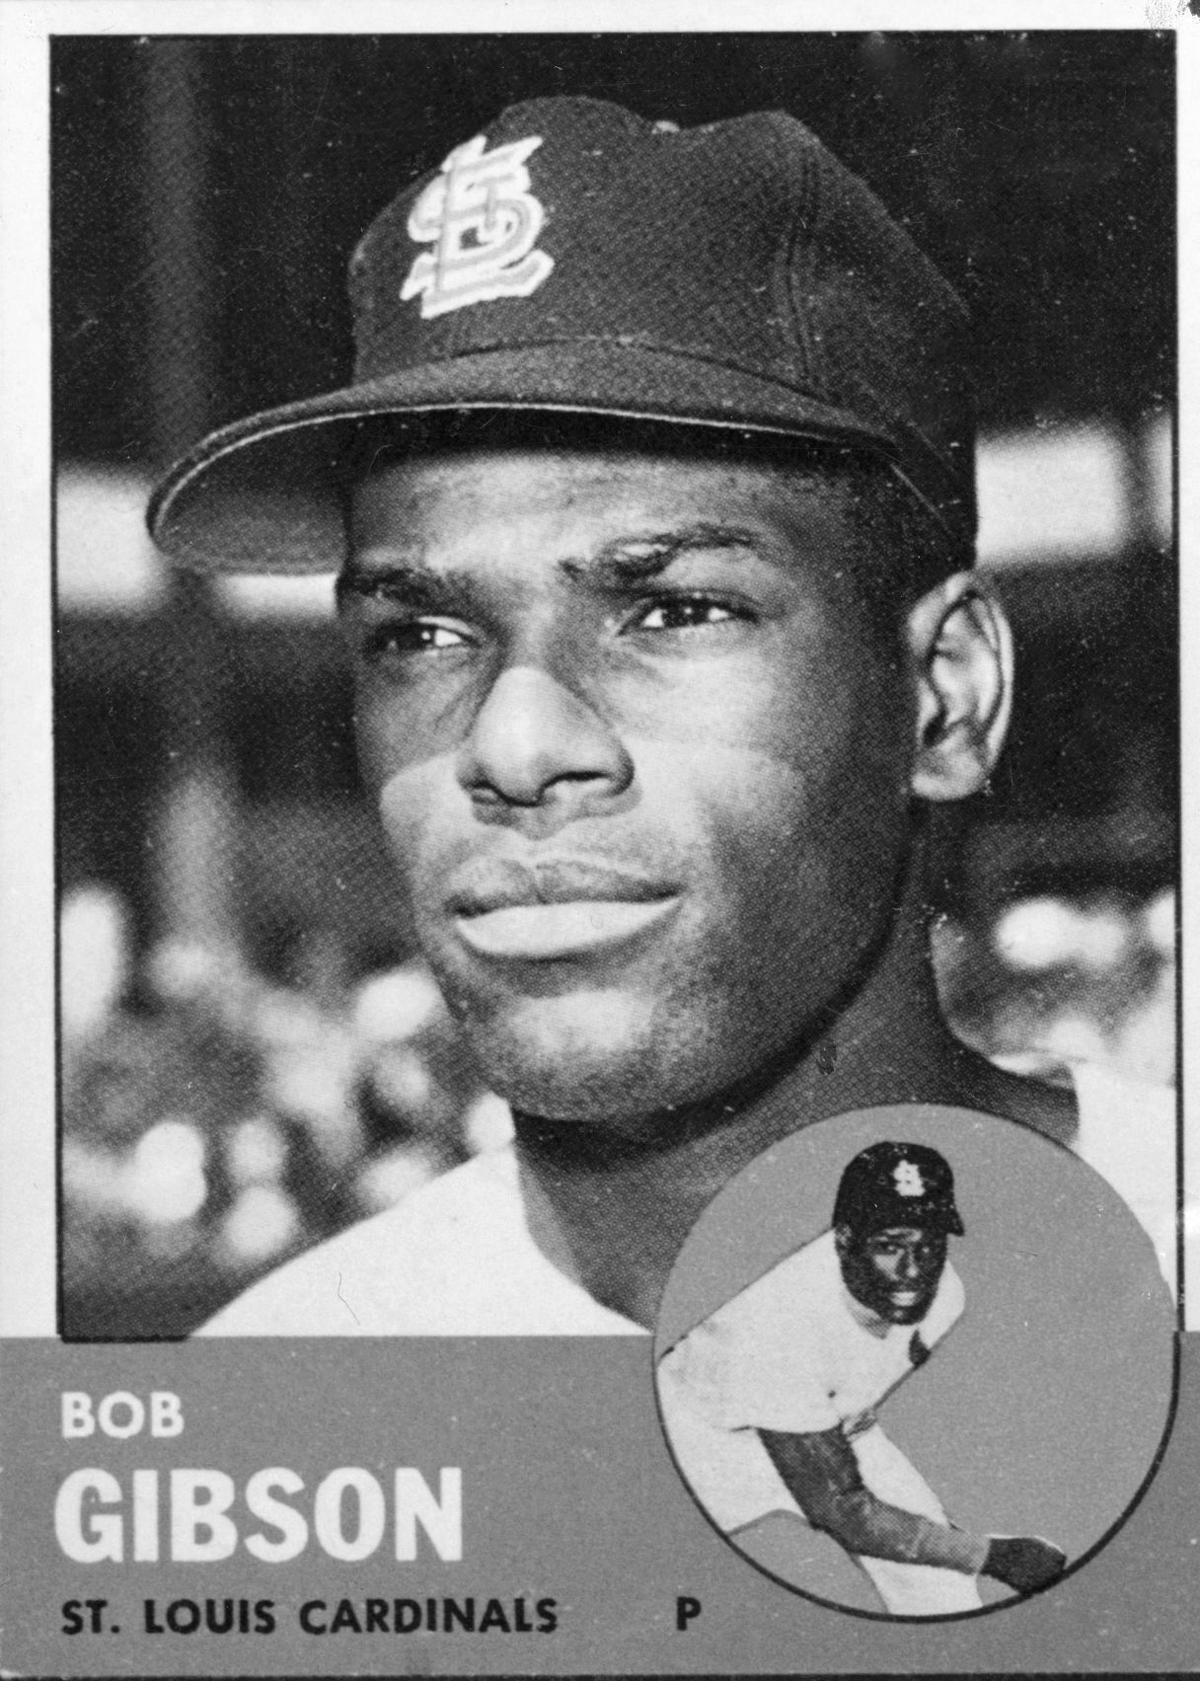 Bob Gibson on race, baseball